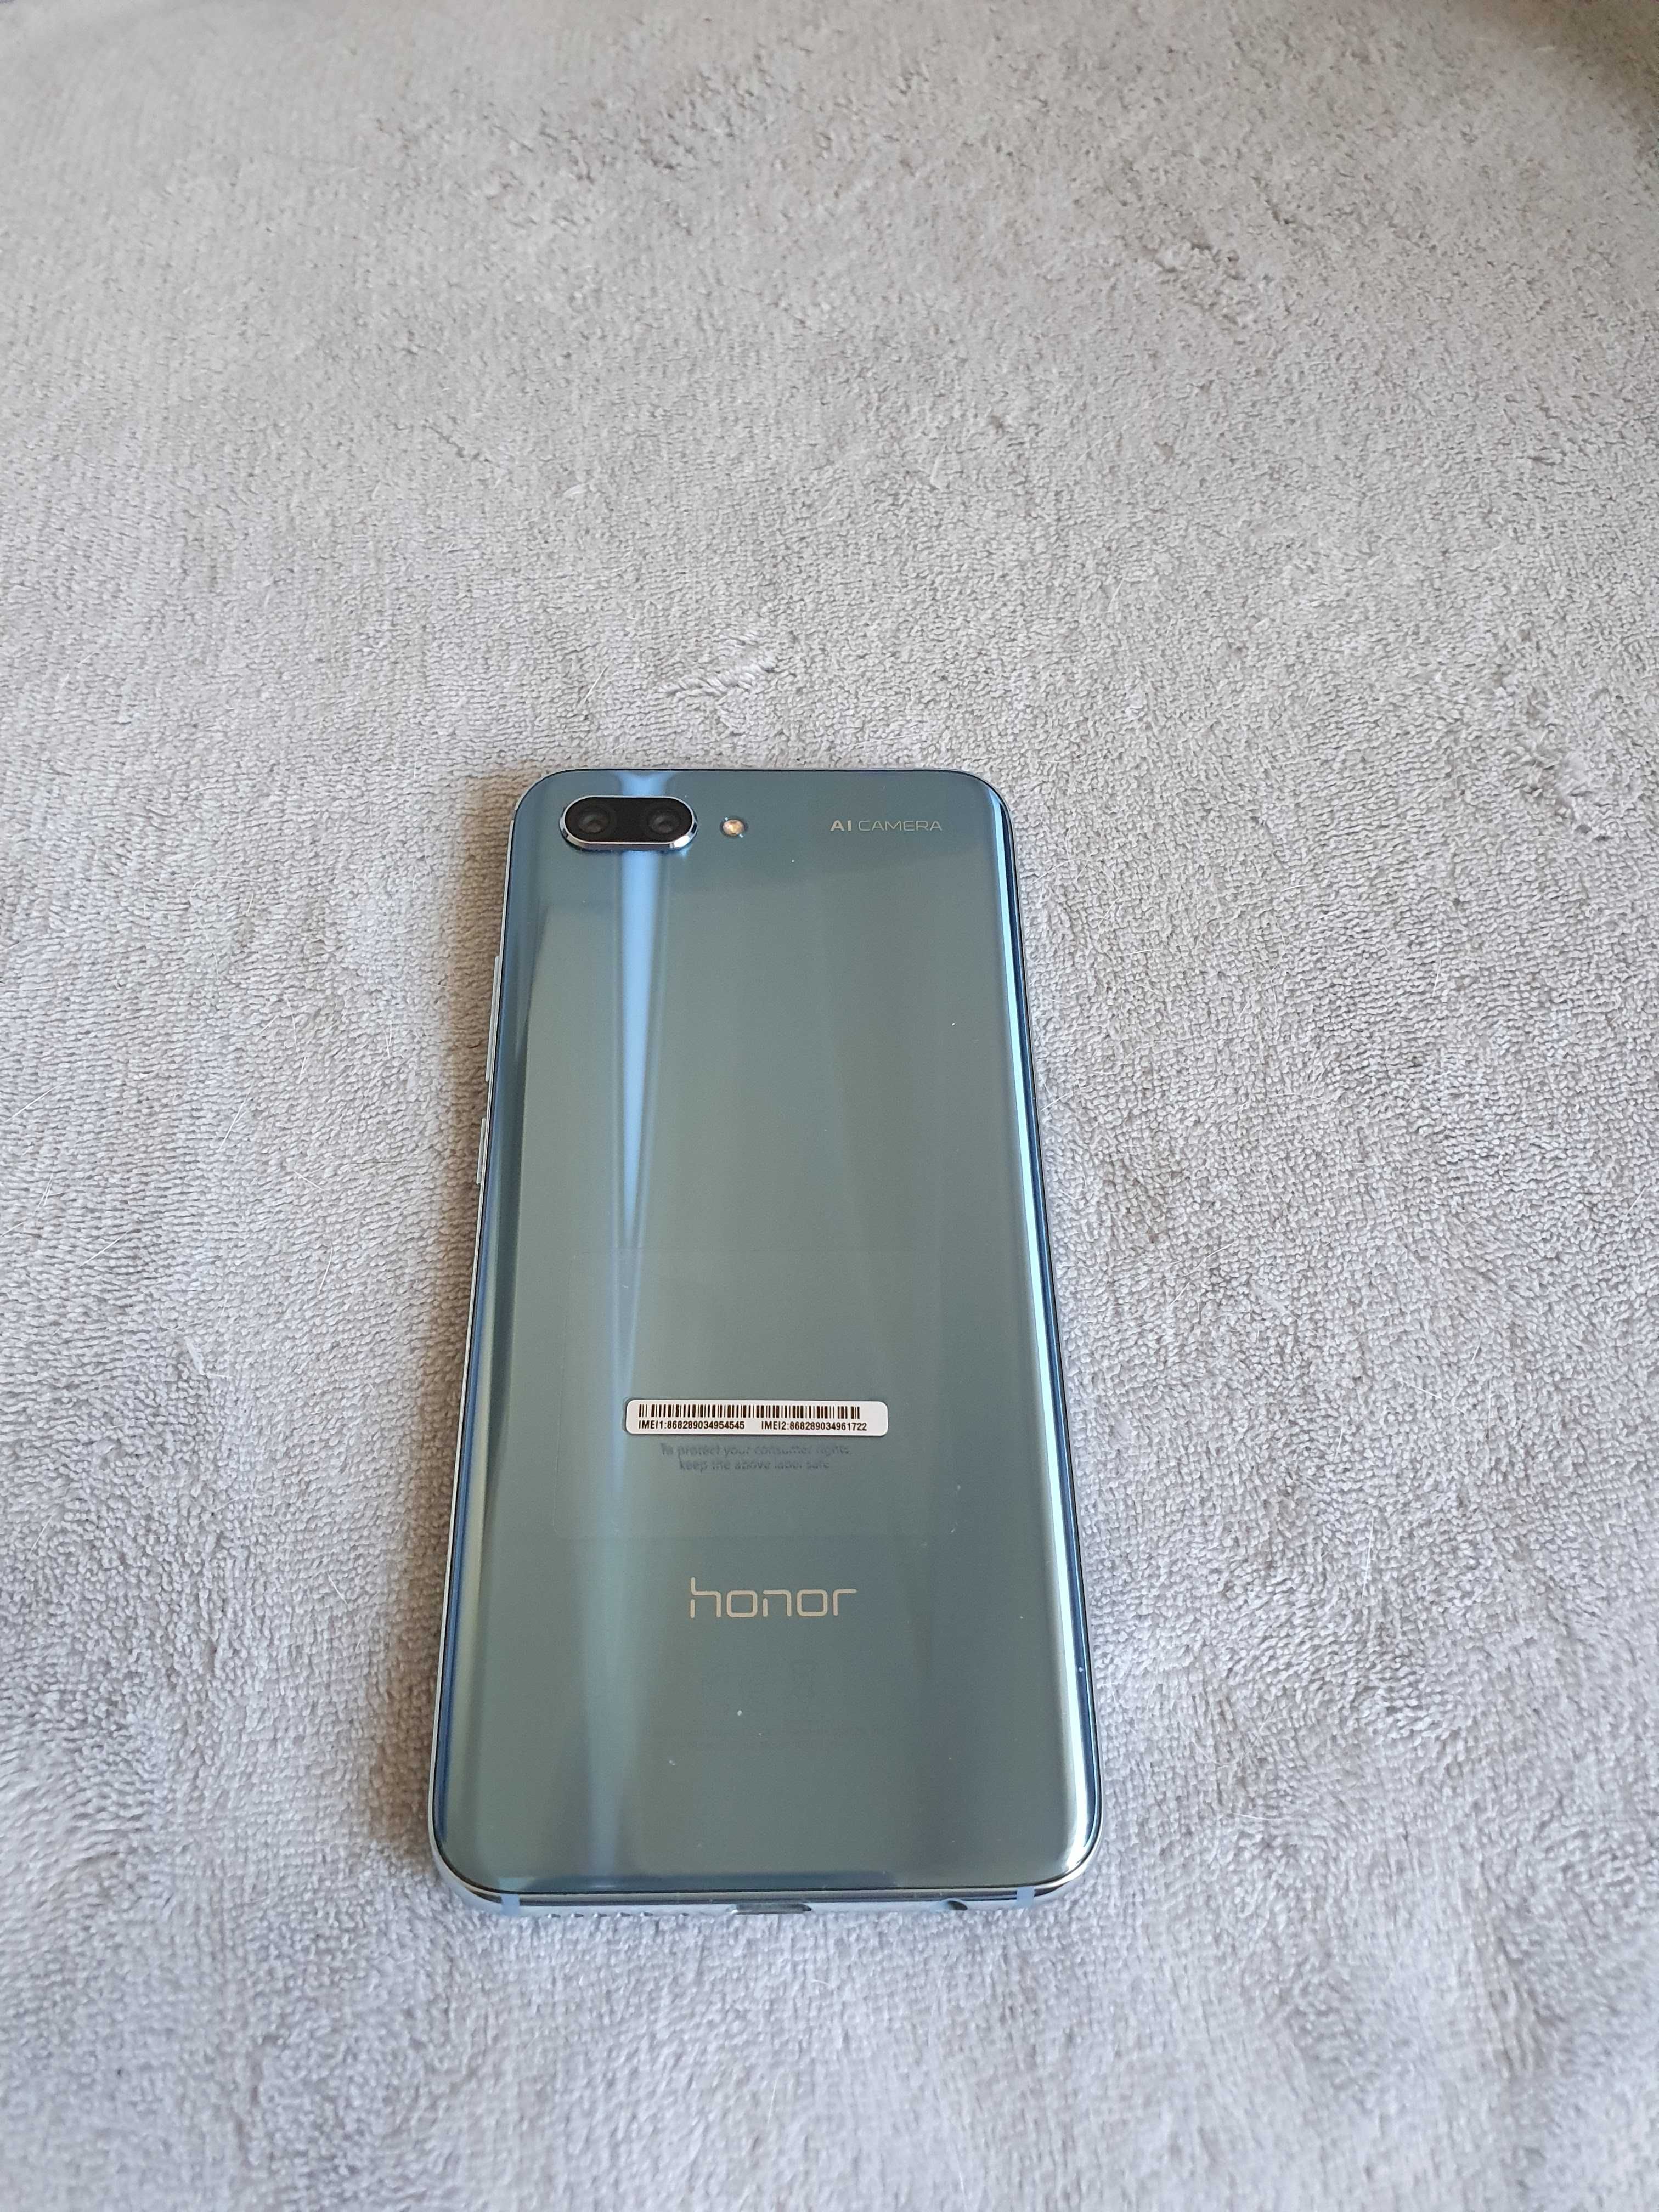 Vand telefon mobil Huawei Honor 10 cu husa